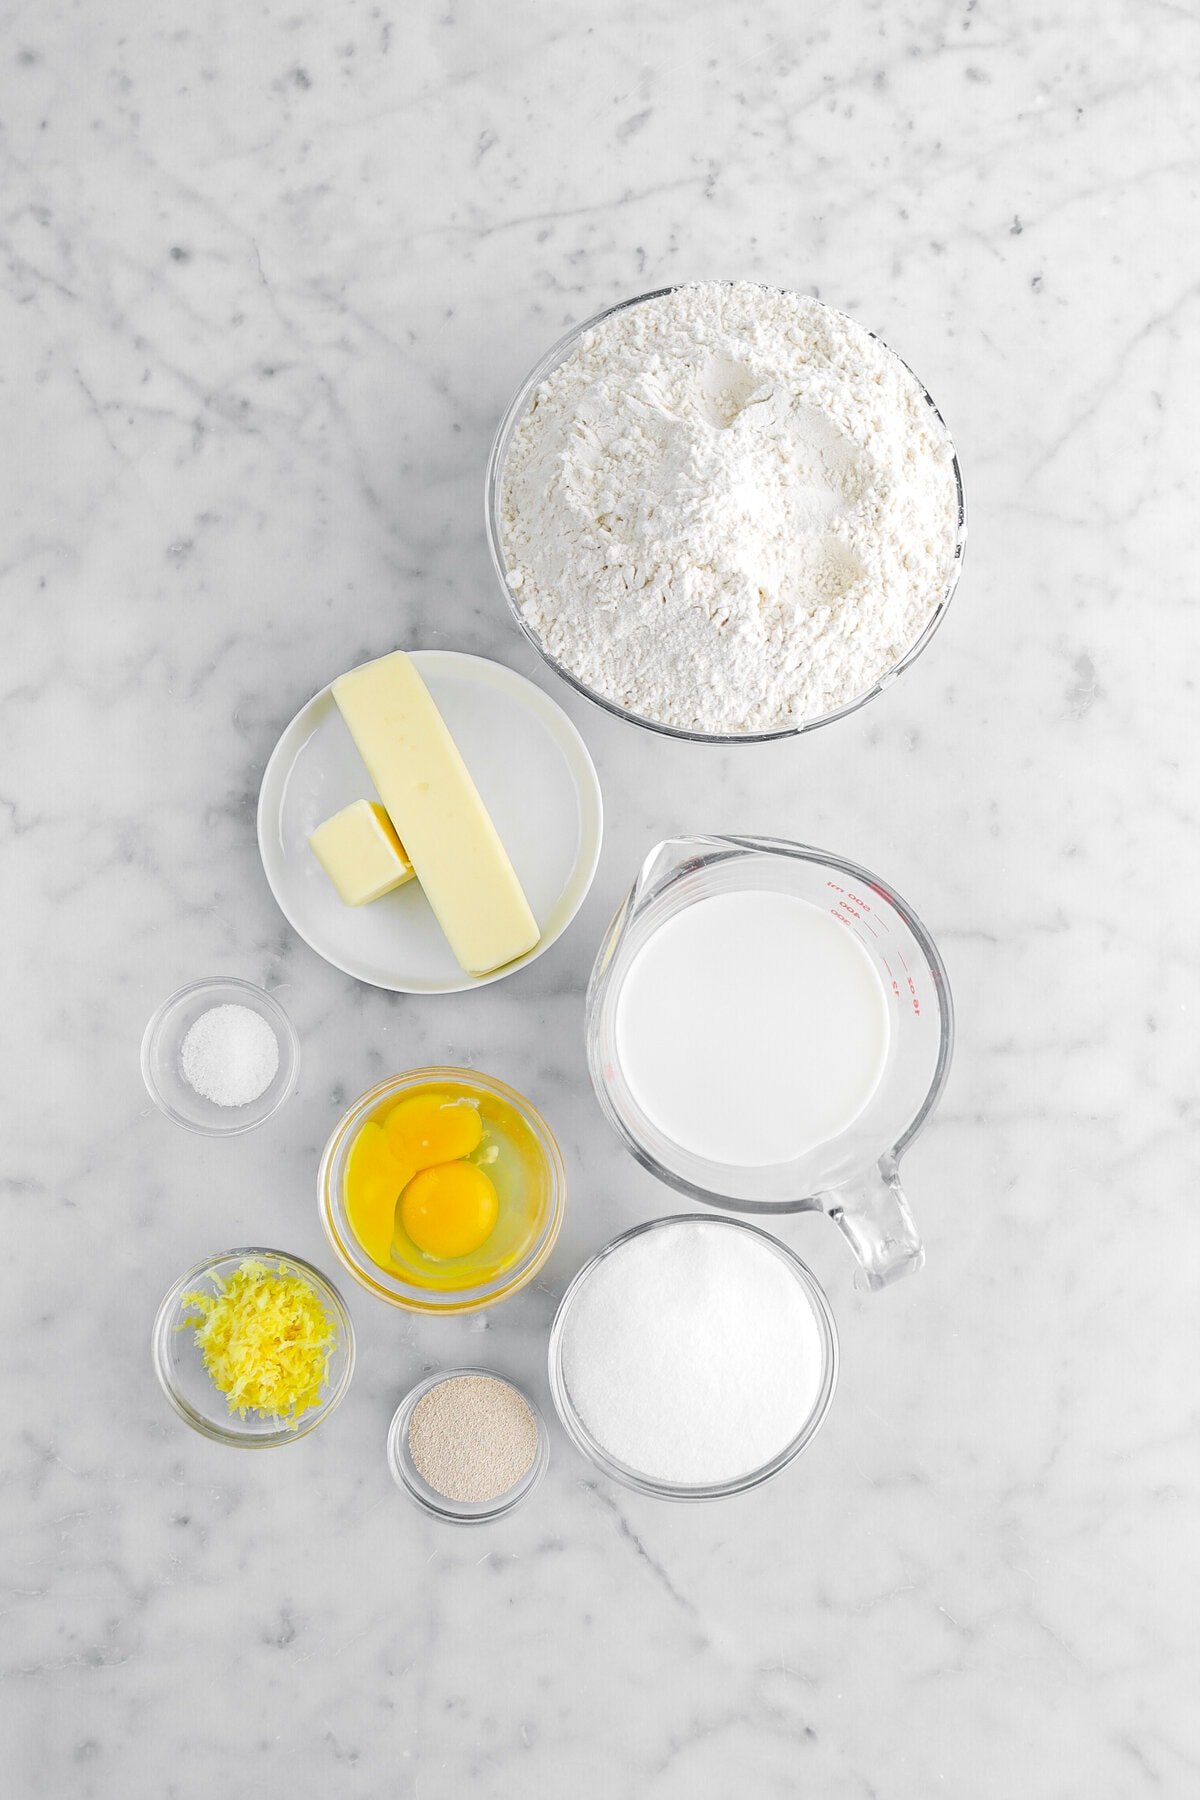 flour, butter, milk, salt, eggs, lemon zest, yeast, and sugar on marble surface.